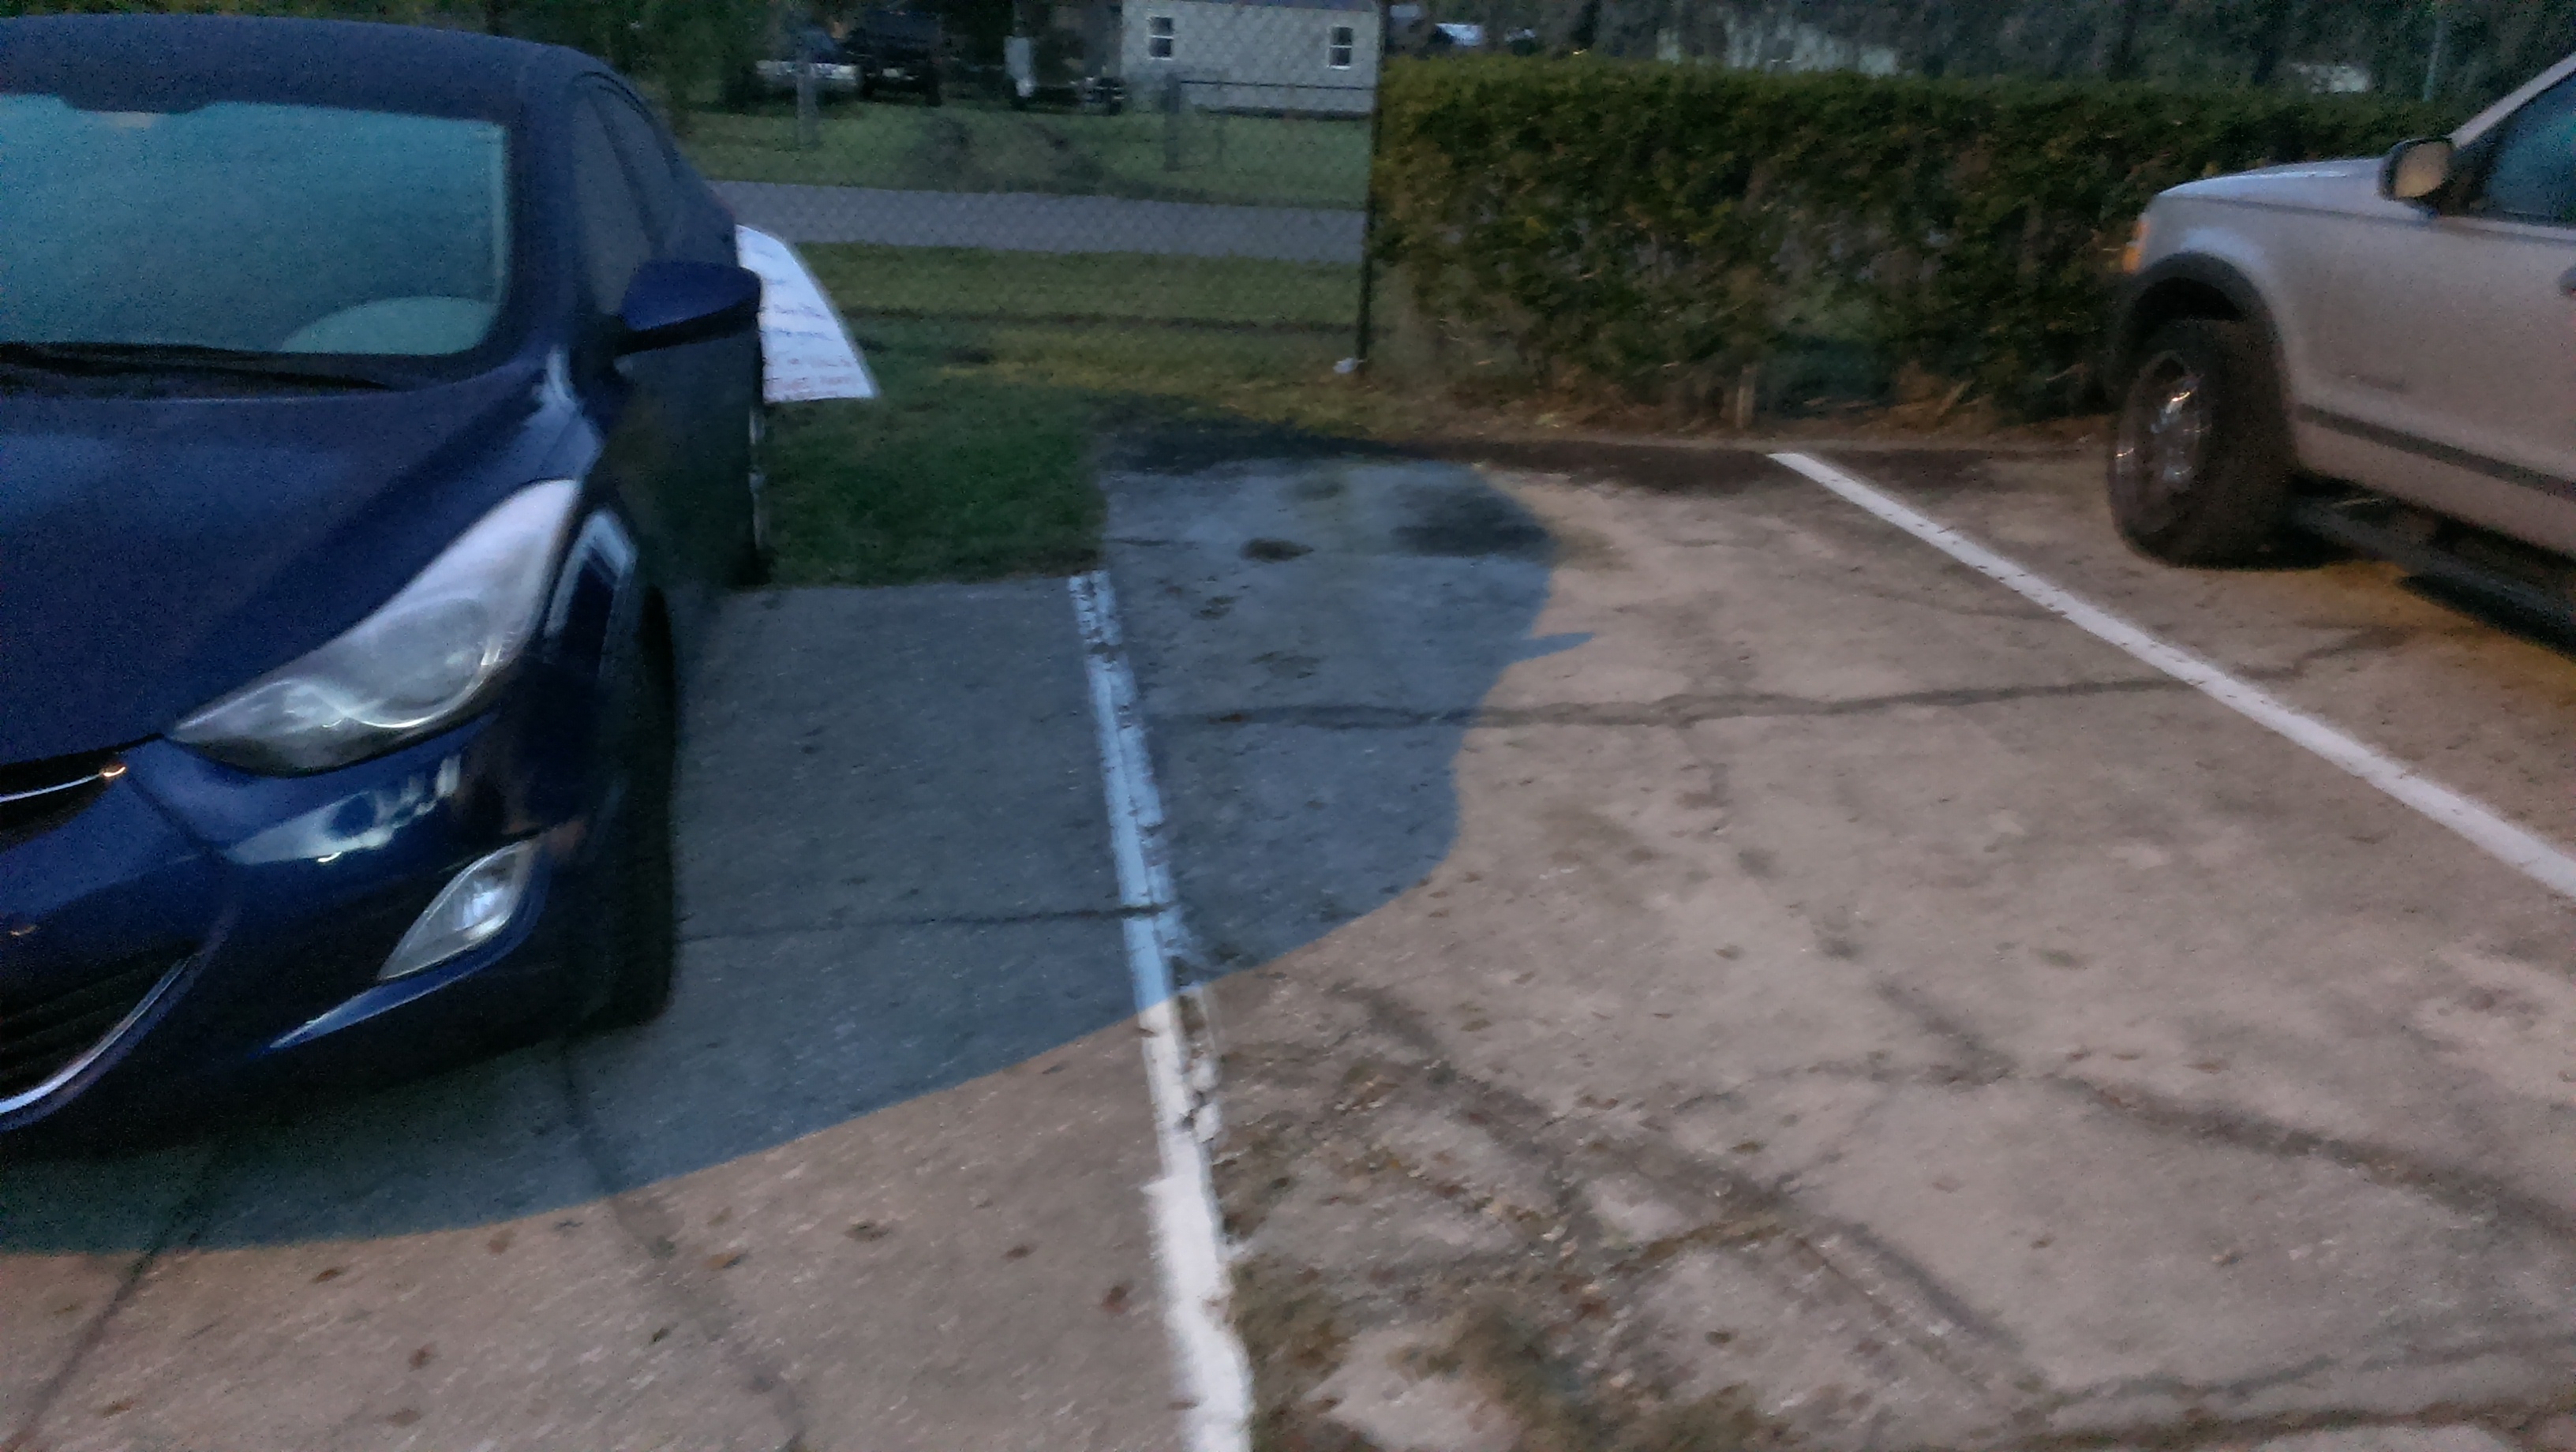 Notice other parking spot is 3 feet longer.